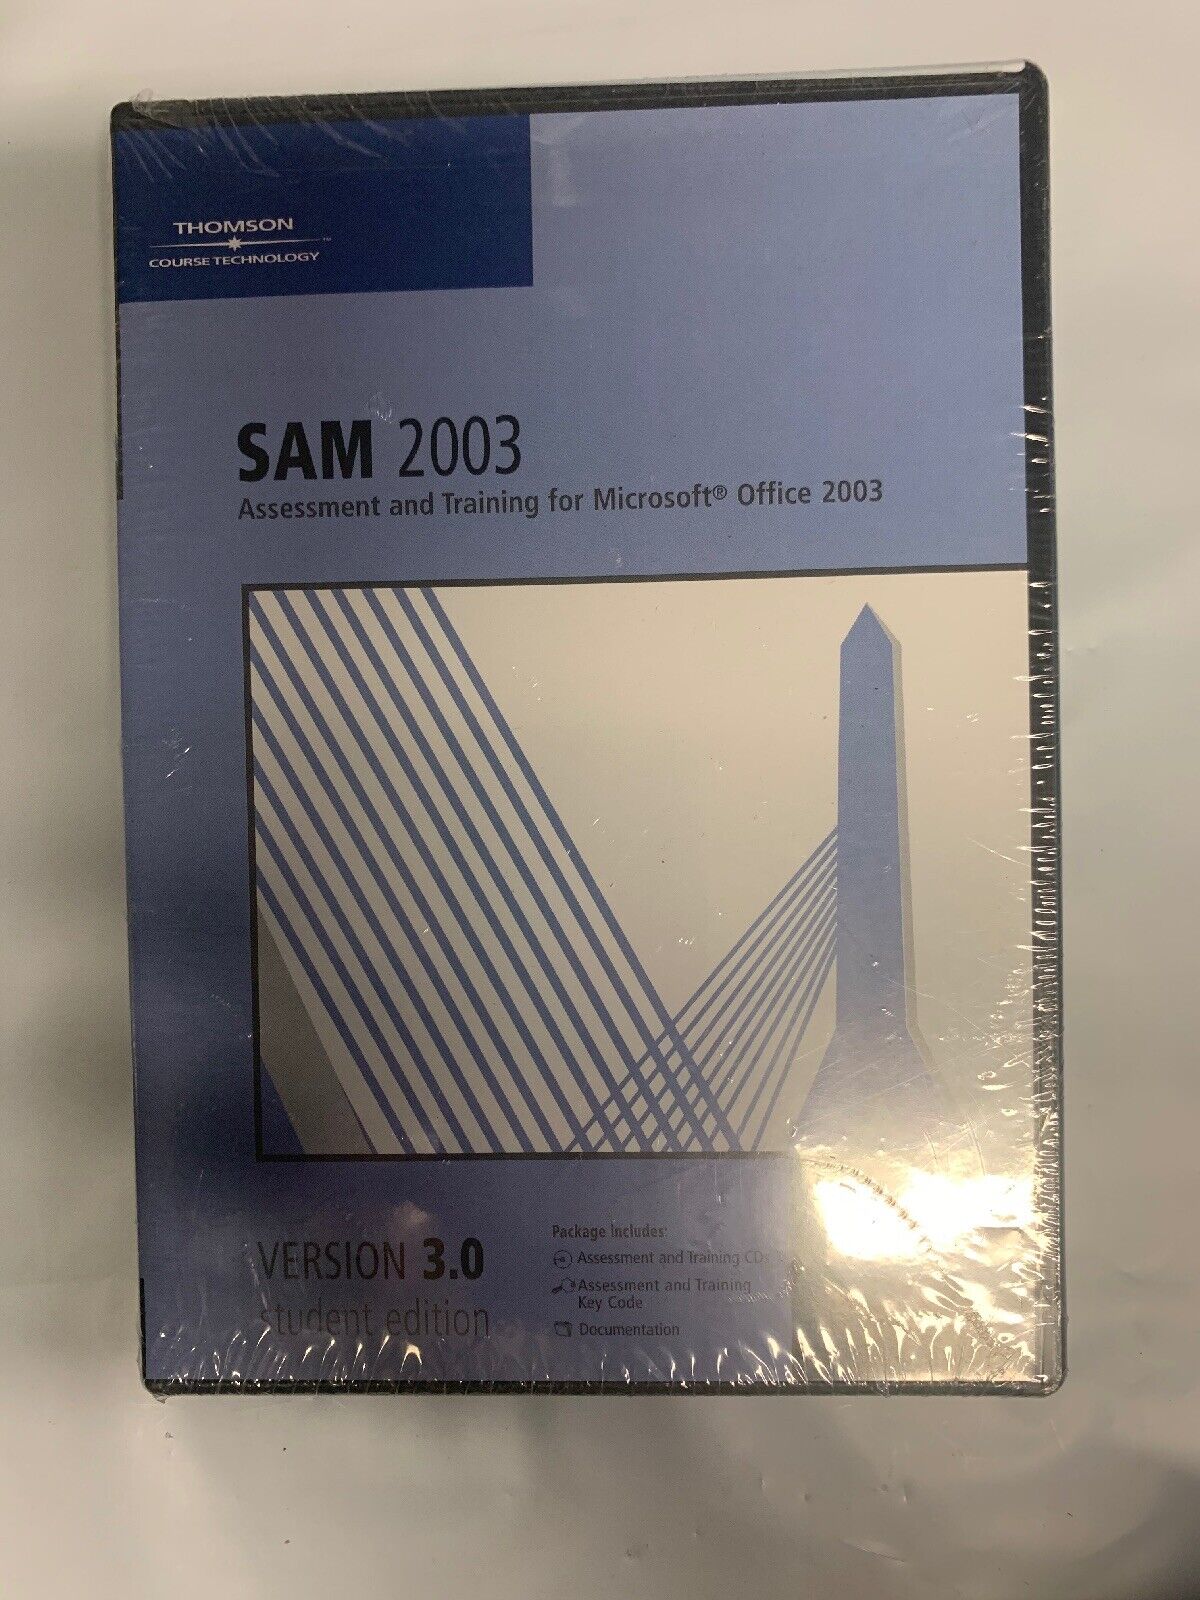  SAM 2003 Version 3.0 Student Edition CD ROM 